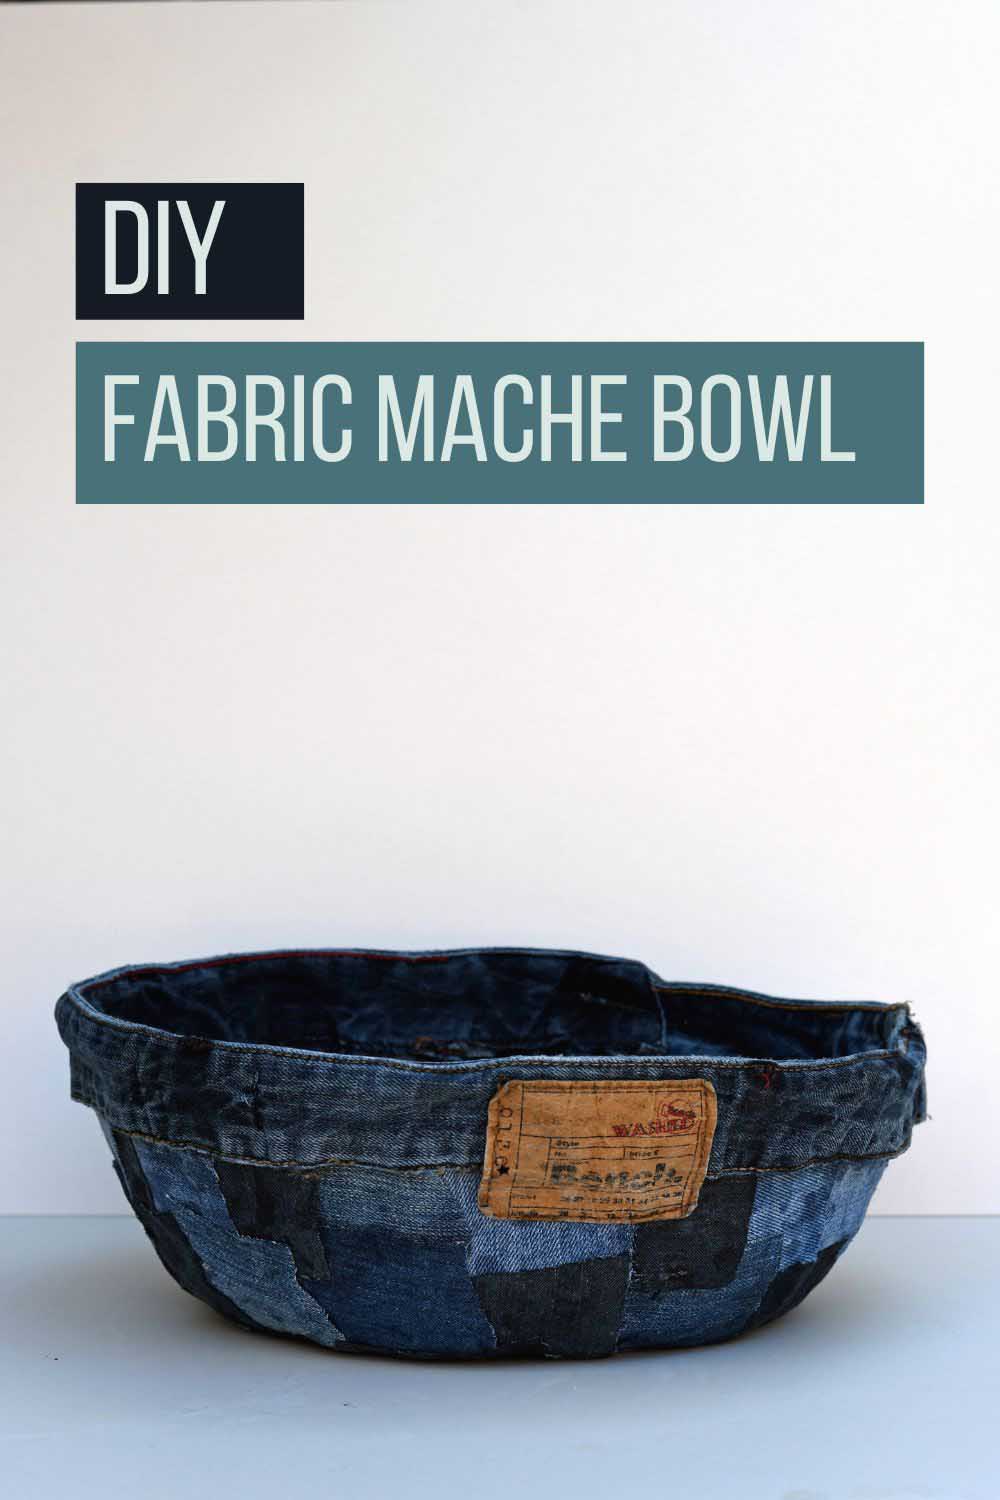 Diy fabric mache bowl